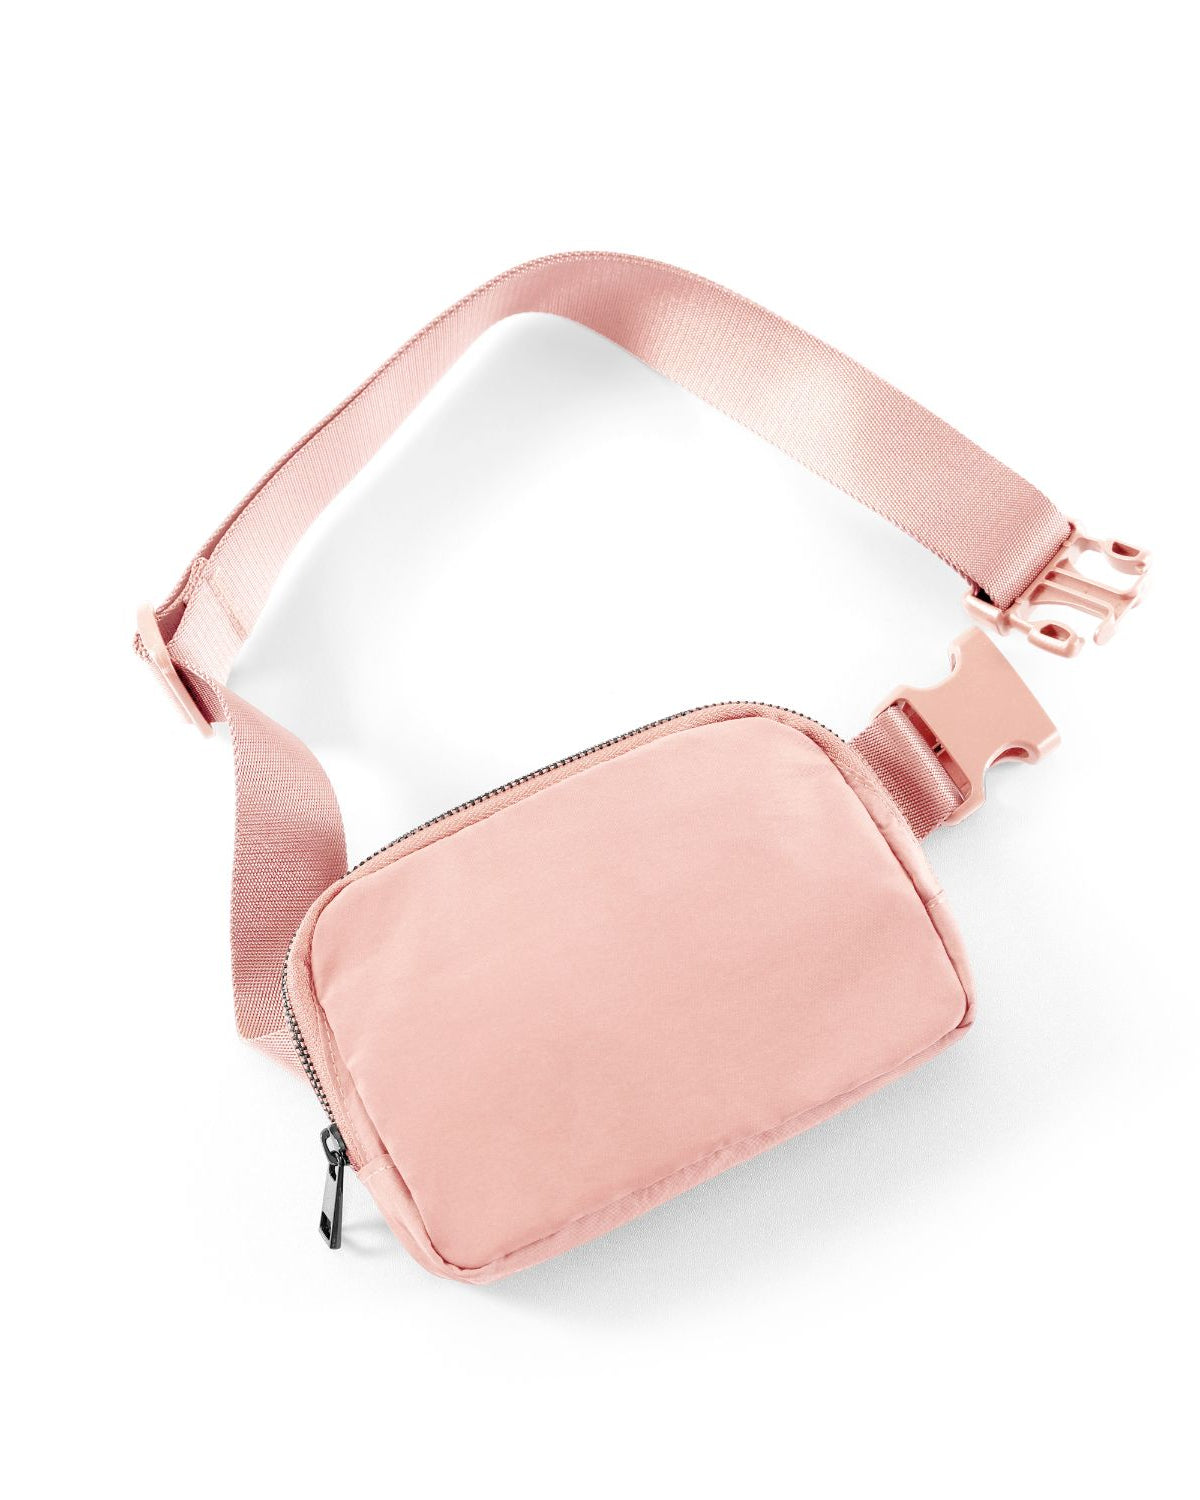 Unisex Mini Belt Bag Light Pink 8" x 2" x 5.5" - ododos